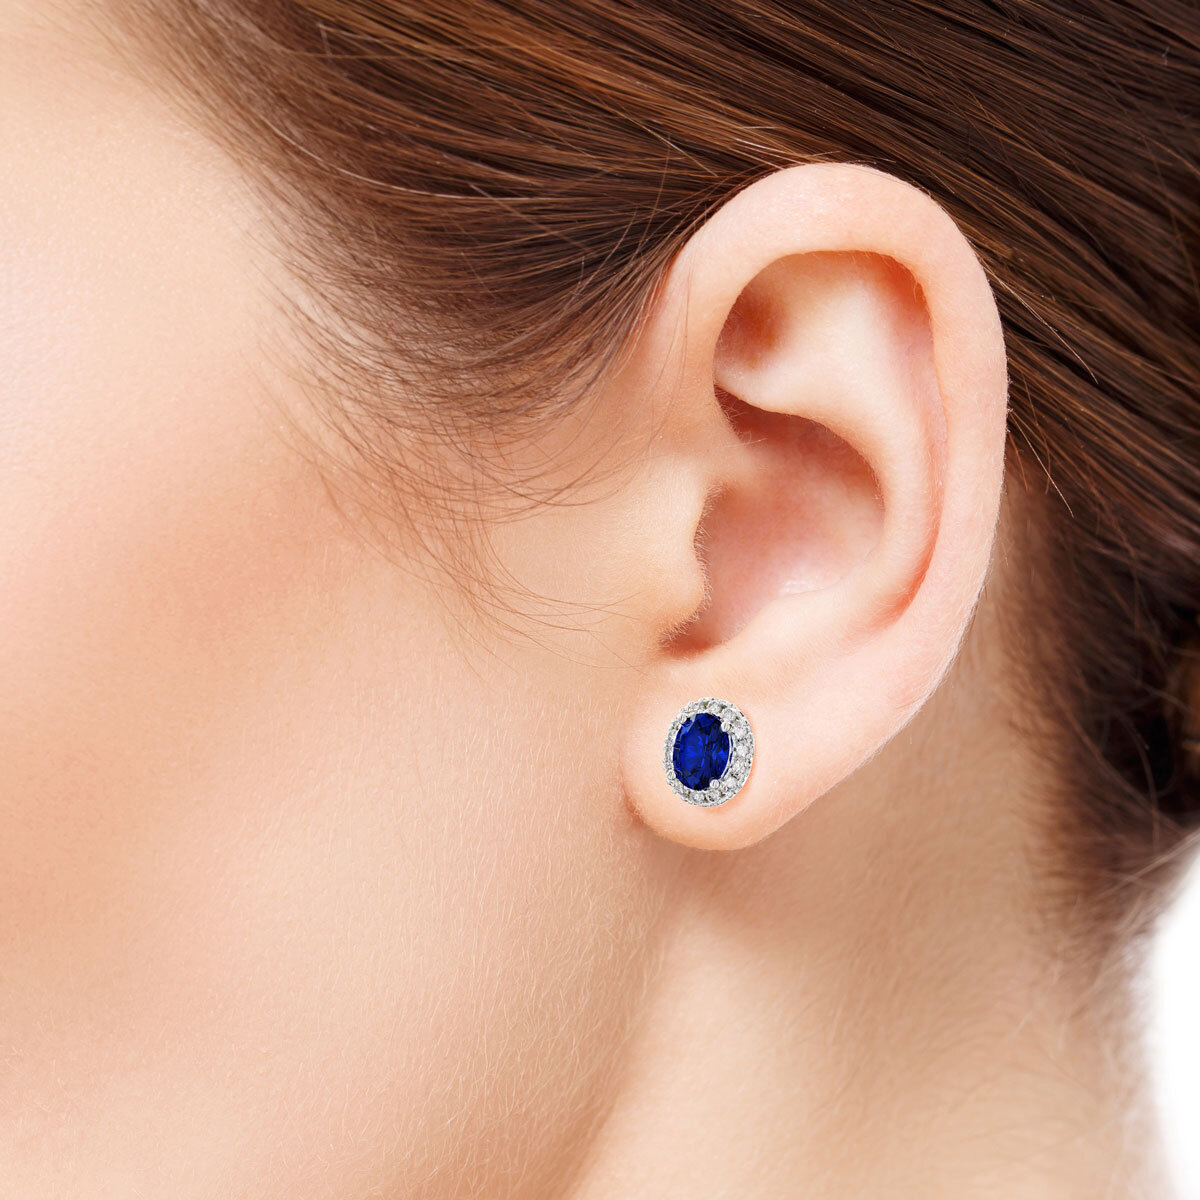 Oval Cut Sapphire & 0.16ctw Diamond Halo Earrings, 14ct White Gold